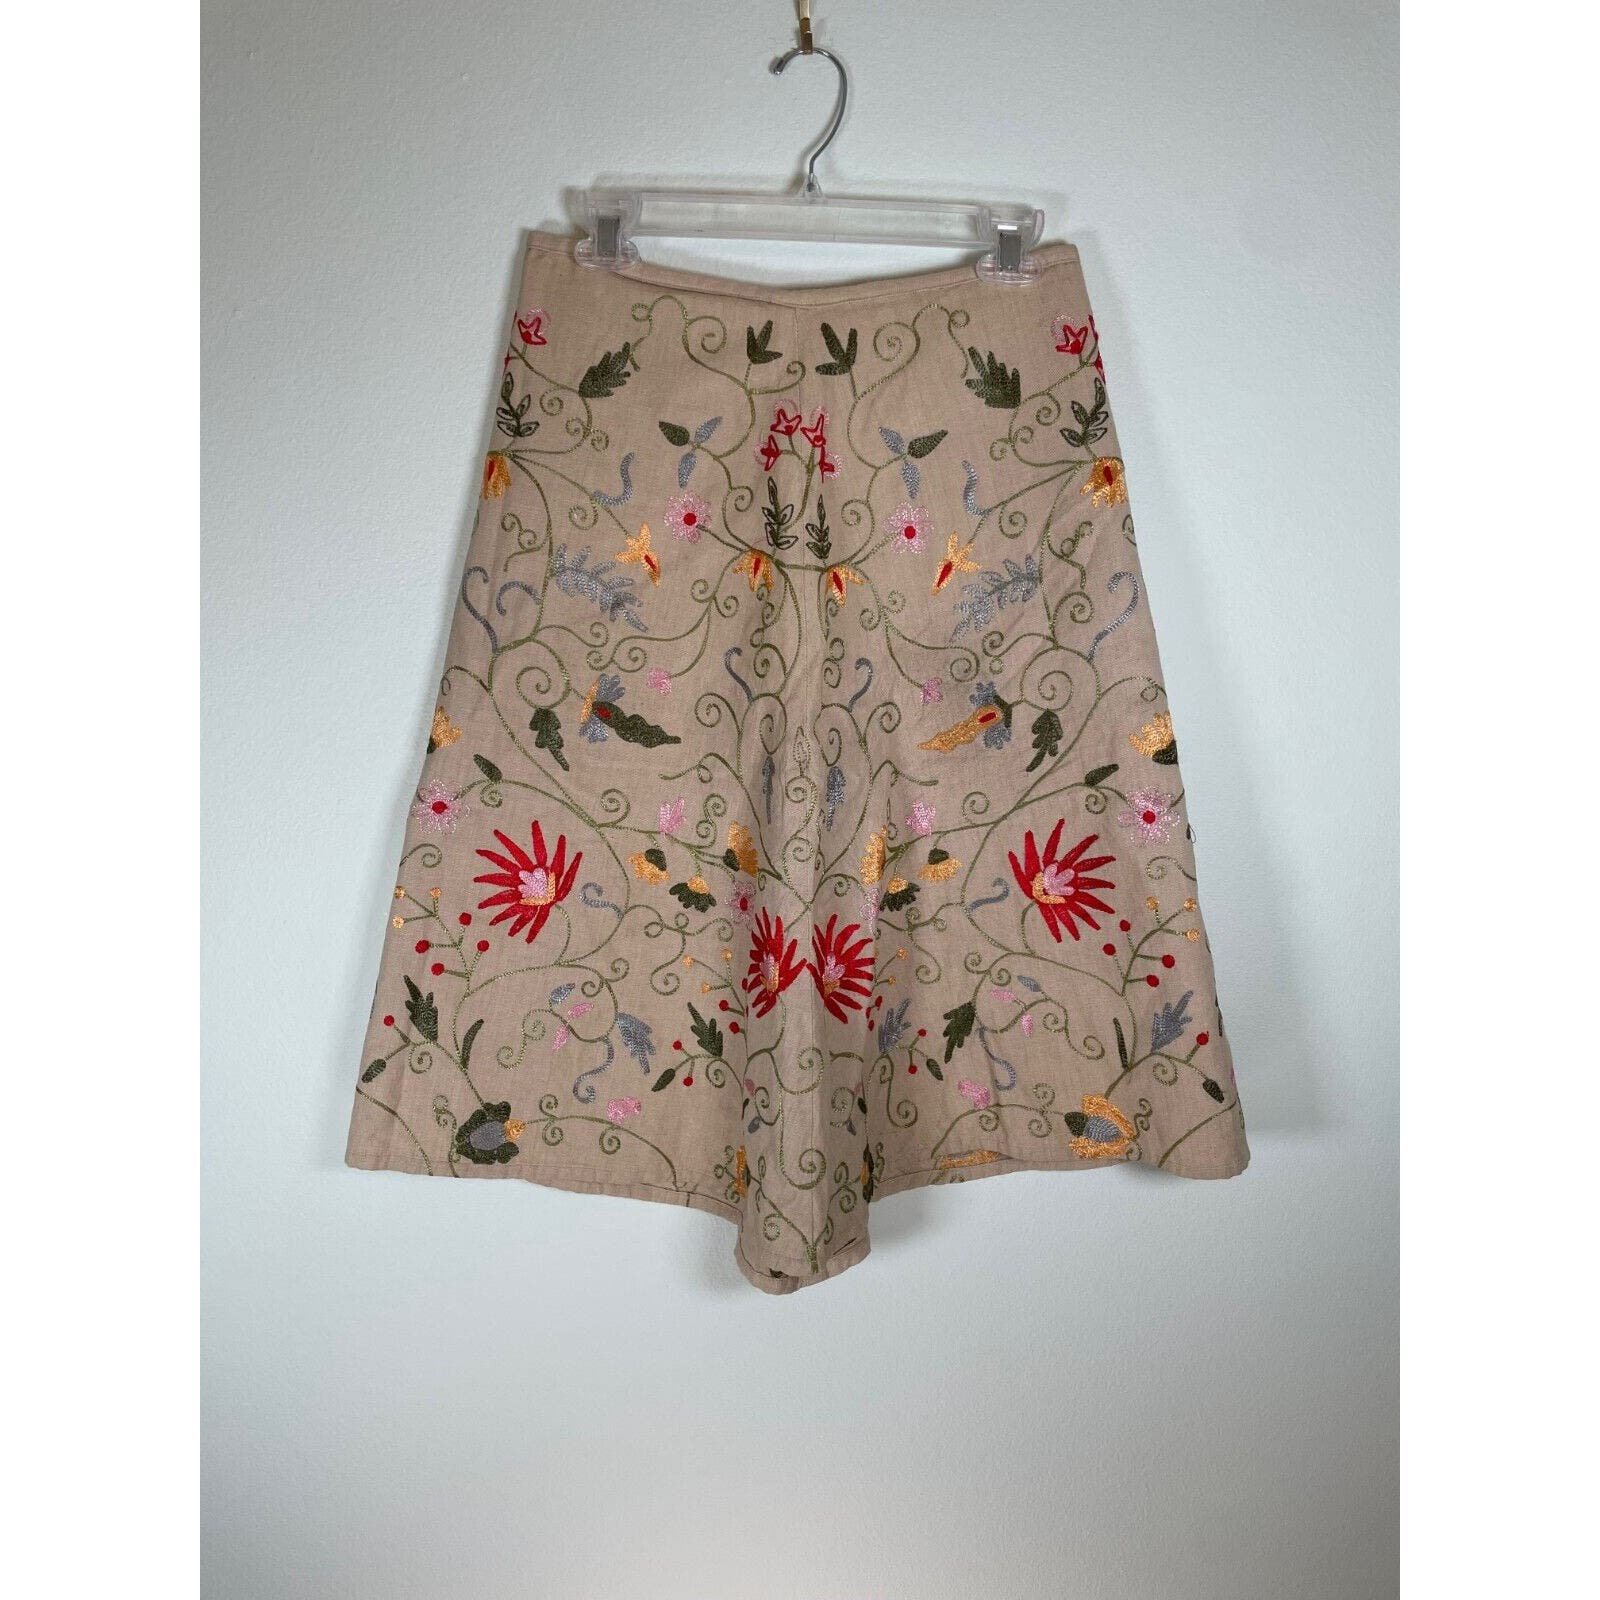 Fashion Vintage Womens Skirt Size 10 Tan Floral Embroid